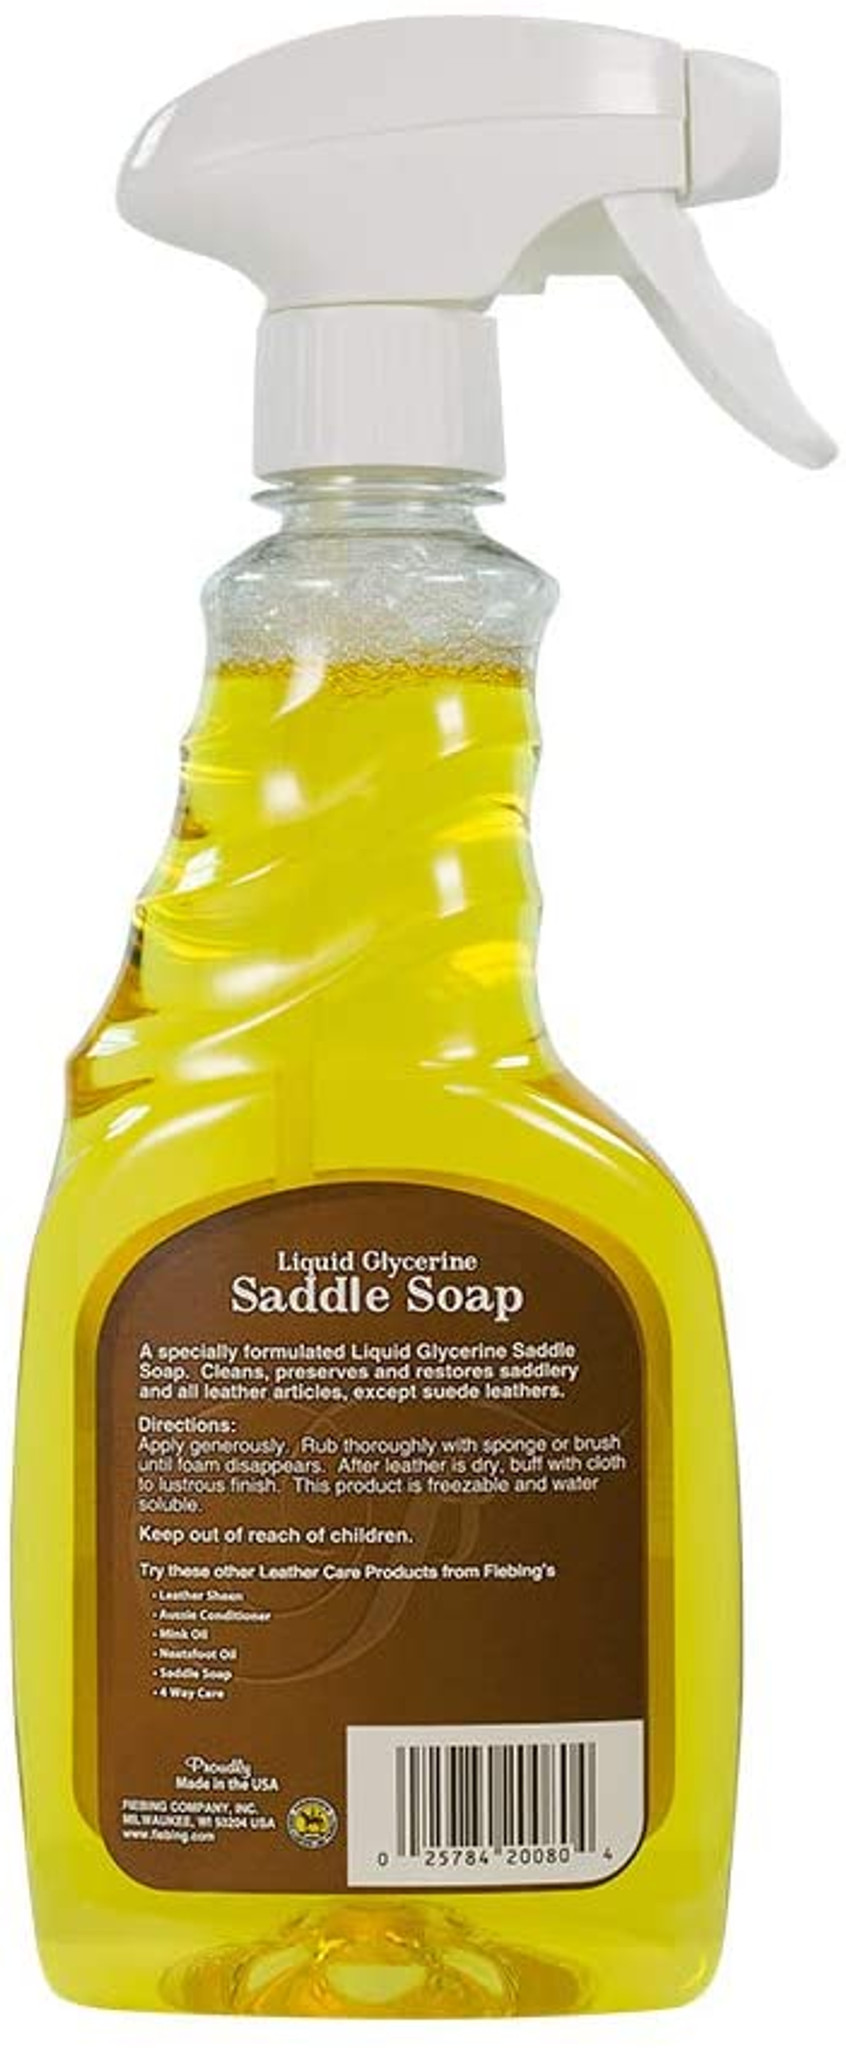 Fiebing's Saddle Soap 12oz / White and Yellow